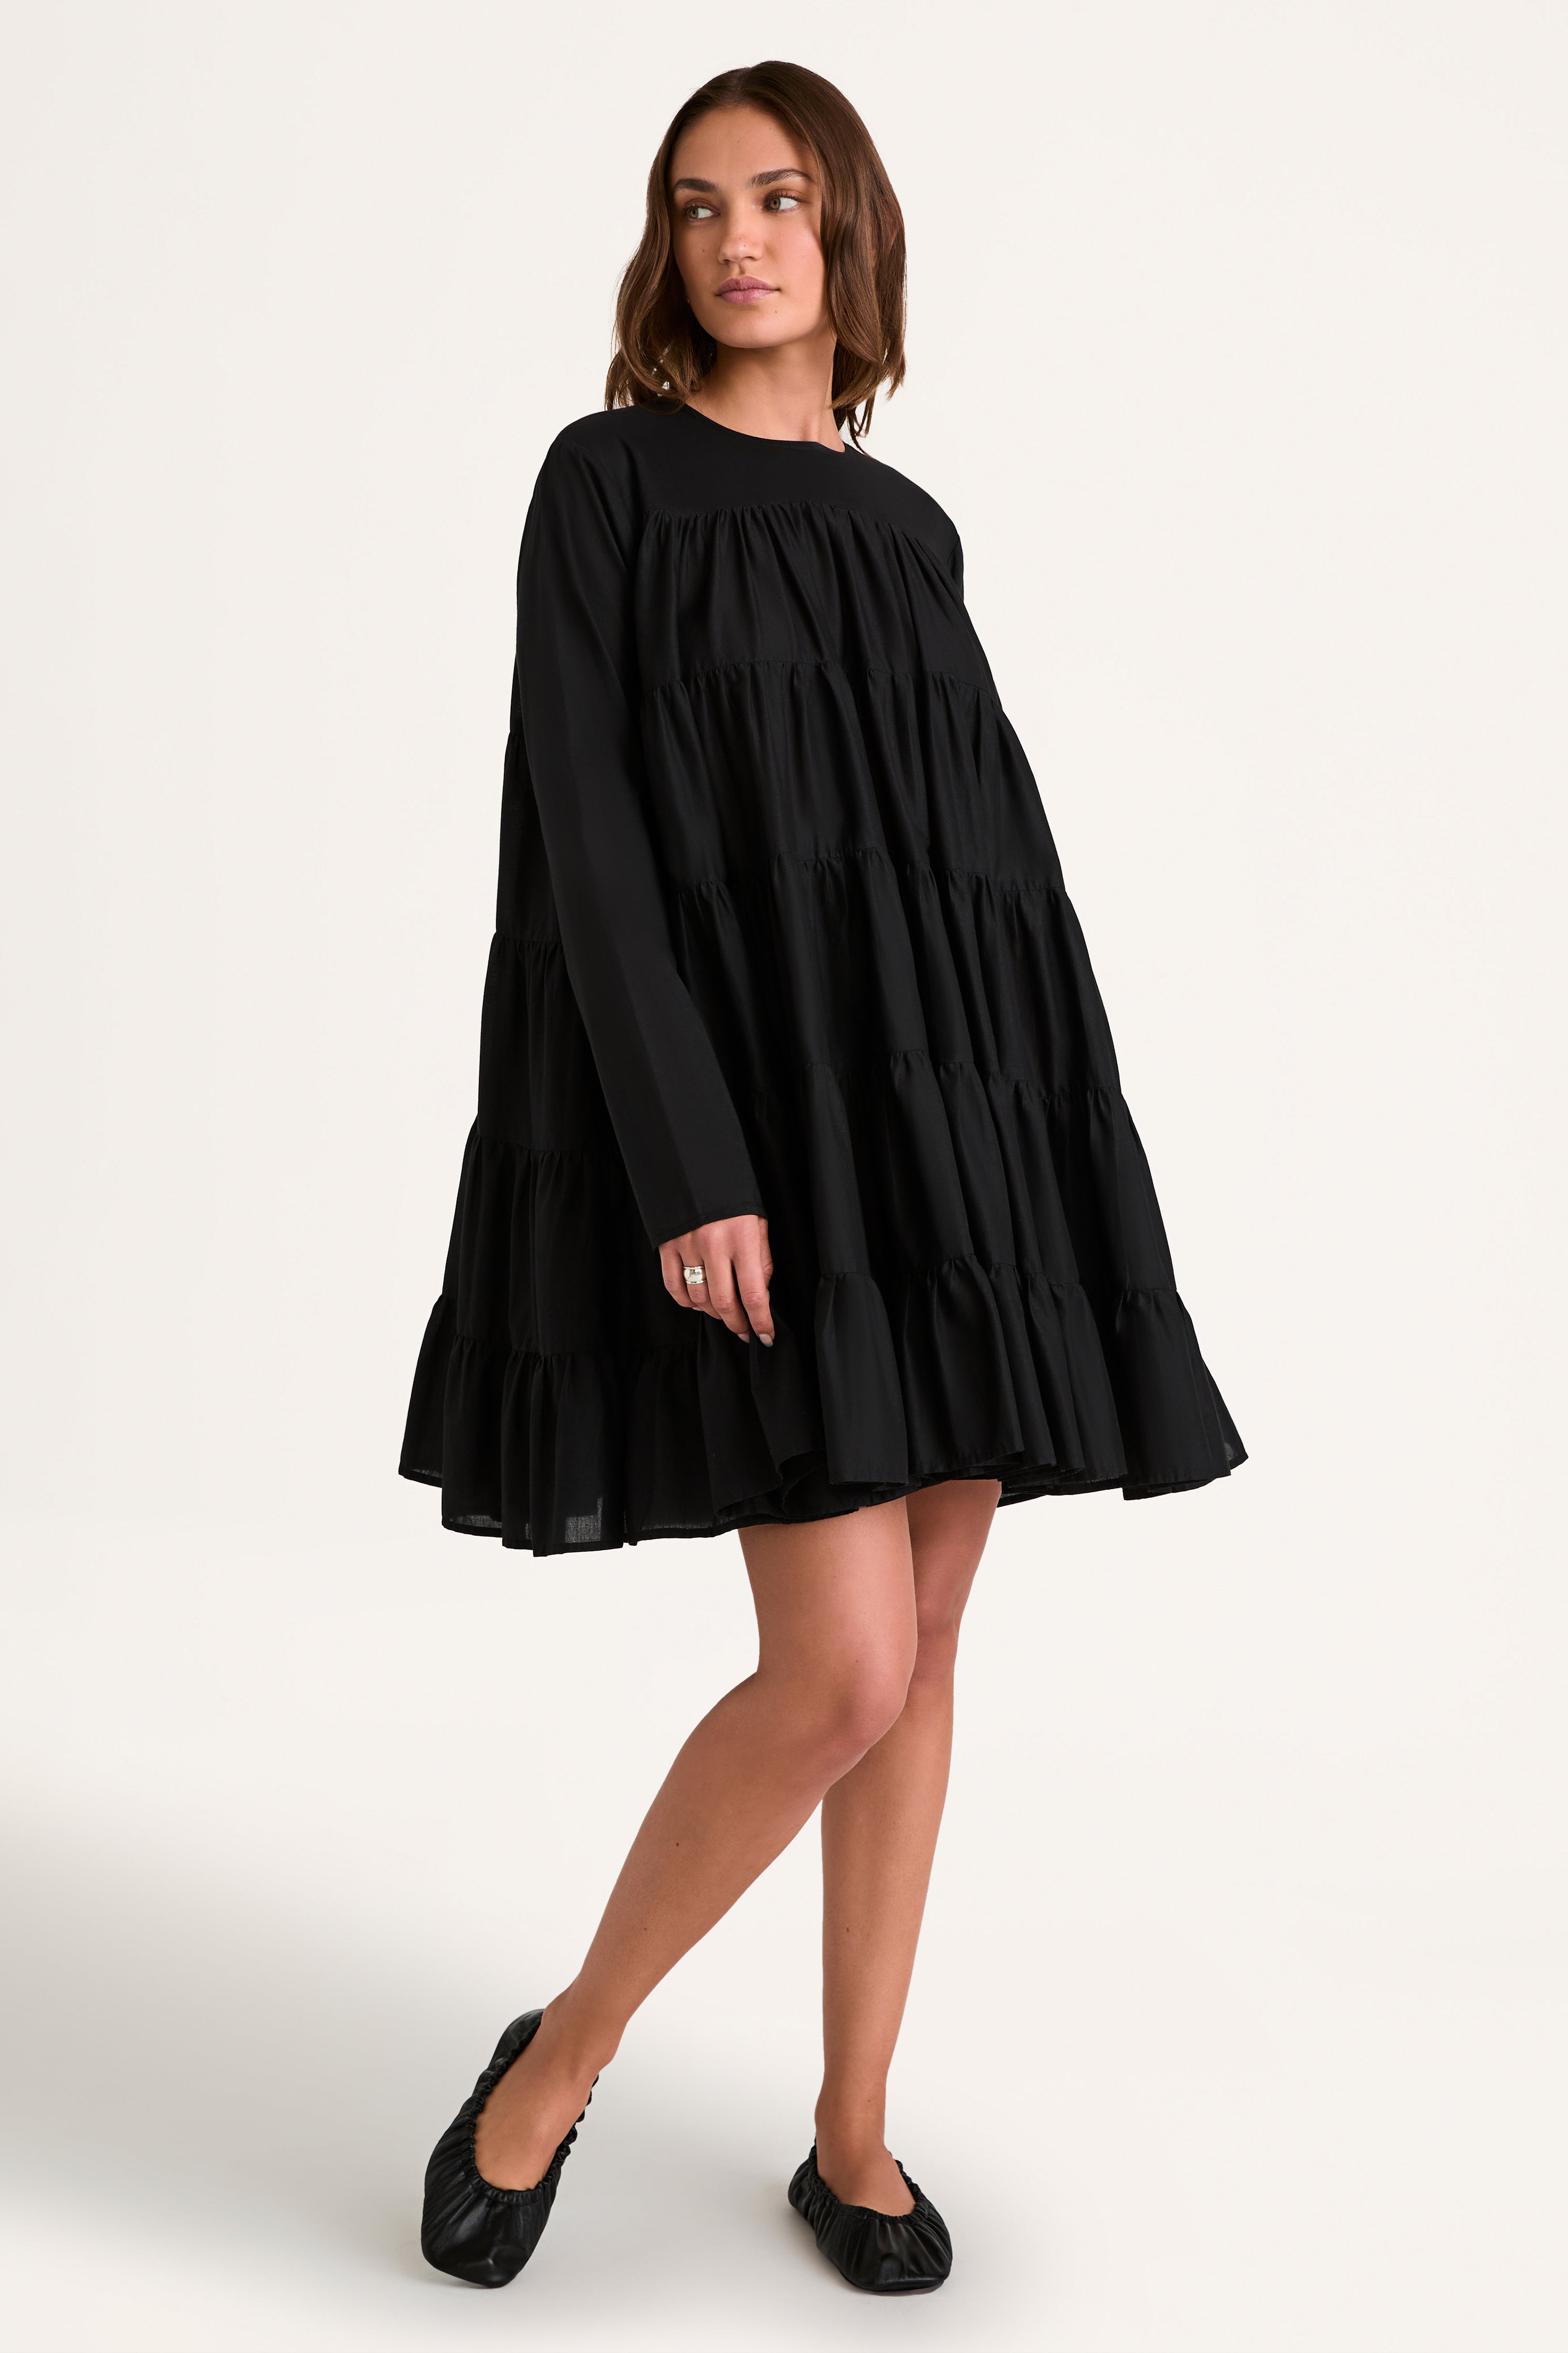 Soliman Dress in Black